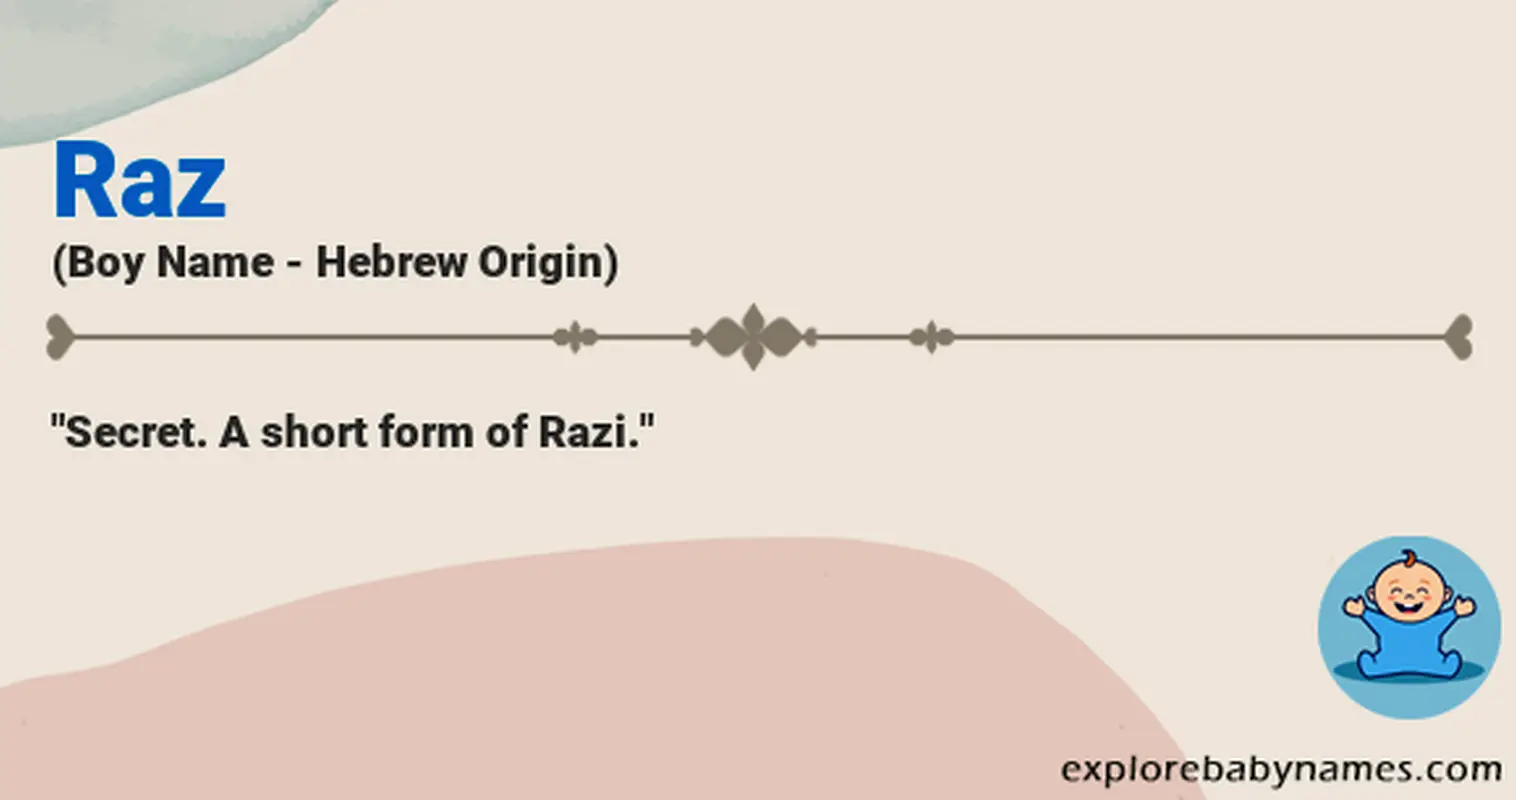 Meaning of Raz